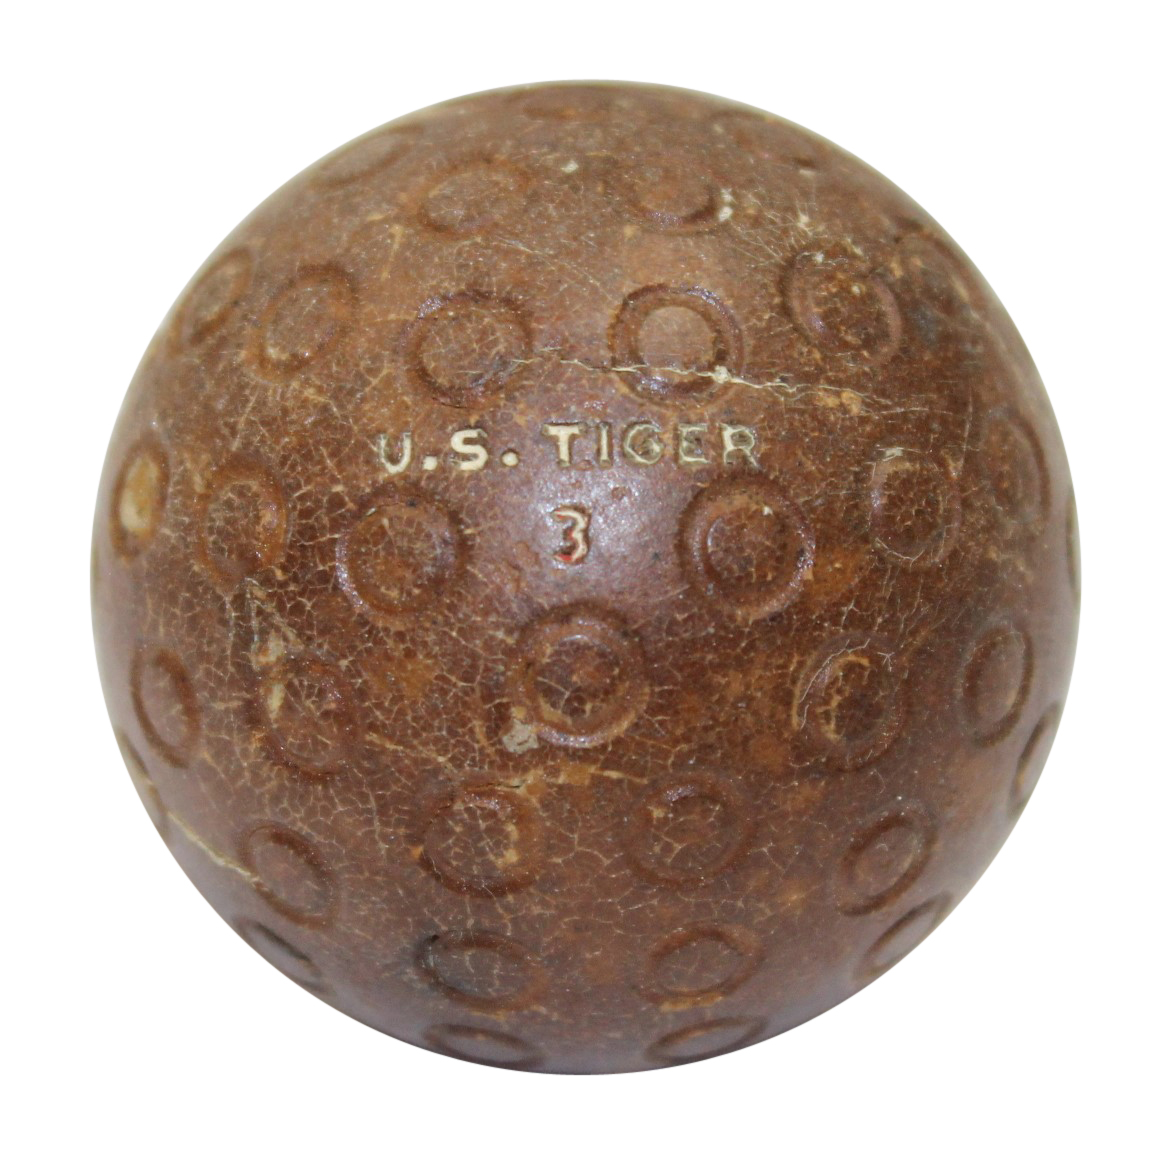 Vintage Golf Ball 105